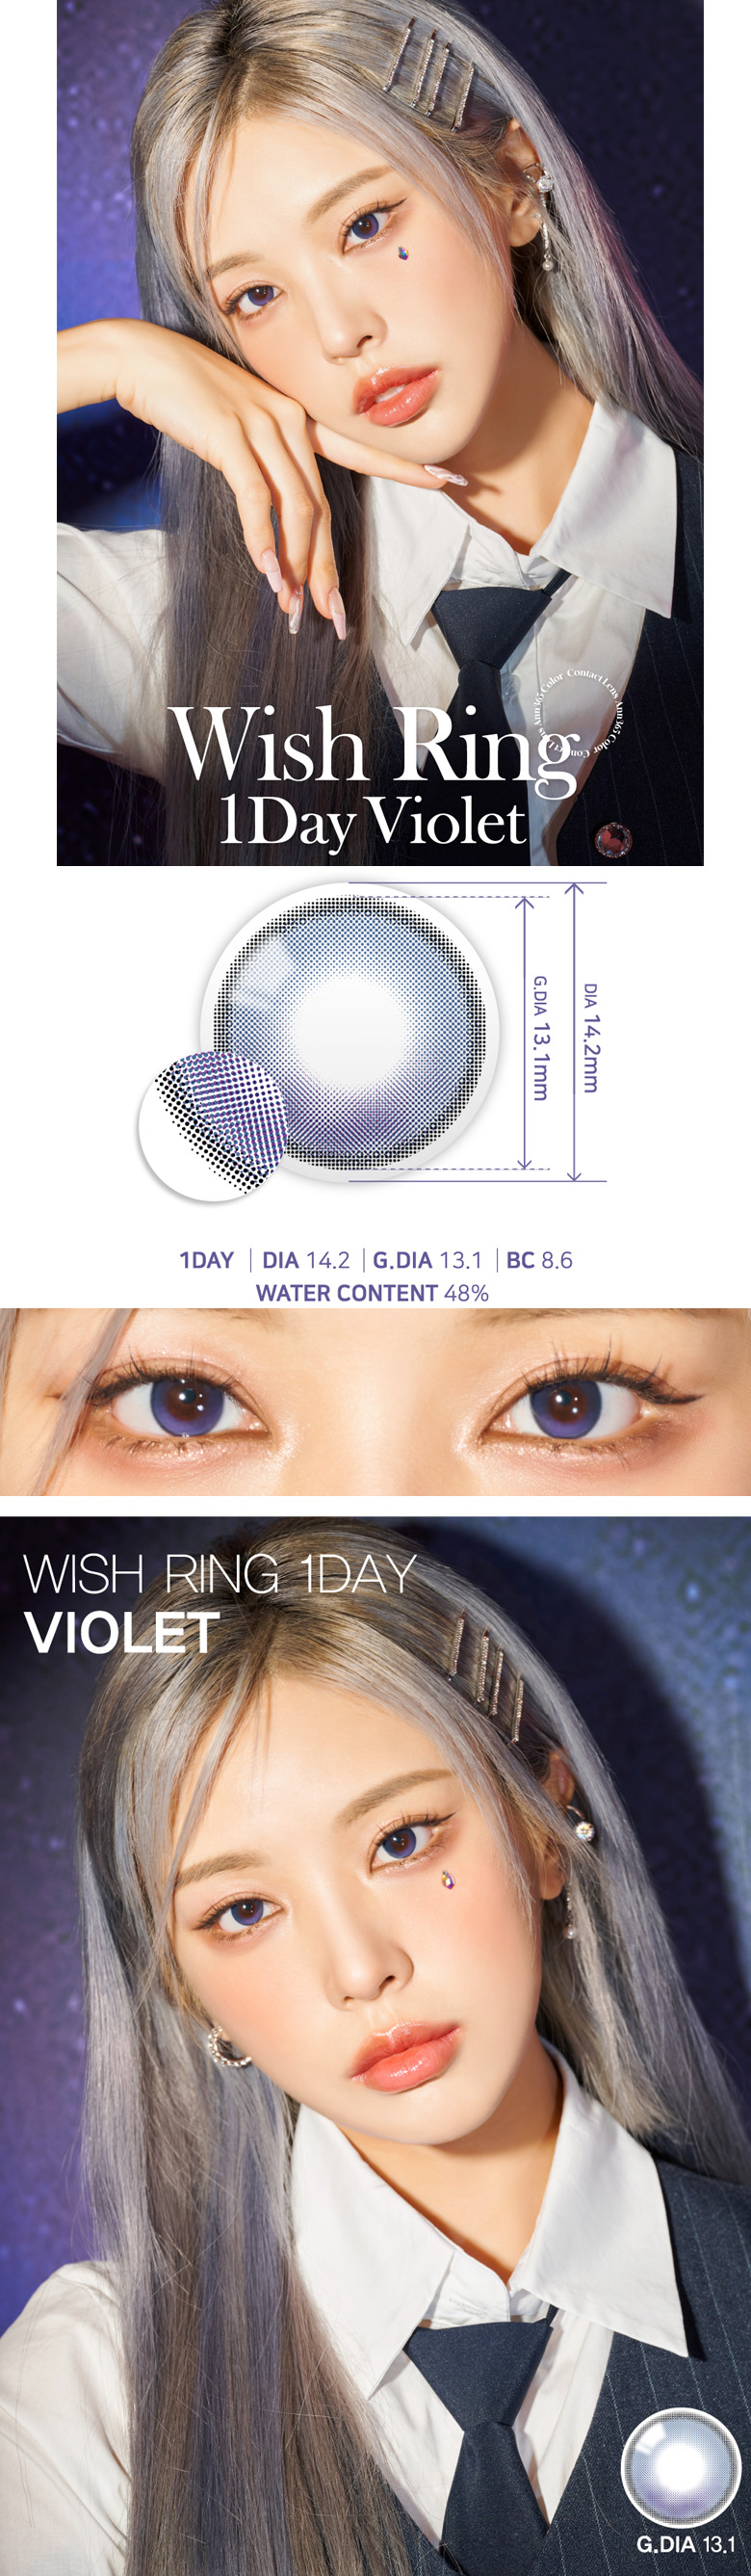 [1 Day/バイオレット/VIOLET] ウィッシュ リング ワンデー - 1ヶ月 - Wish Ring - 1 Day (10pcs) [14.2mm]